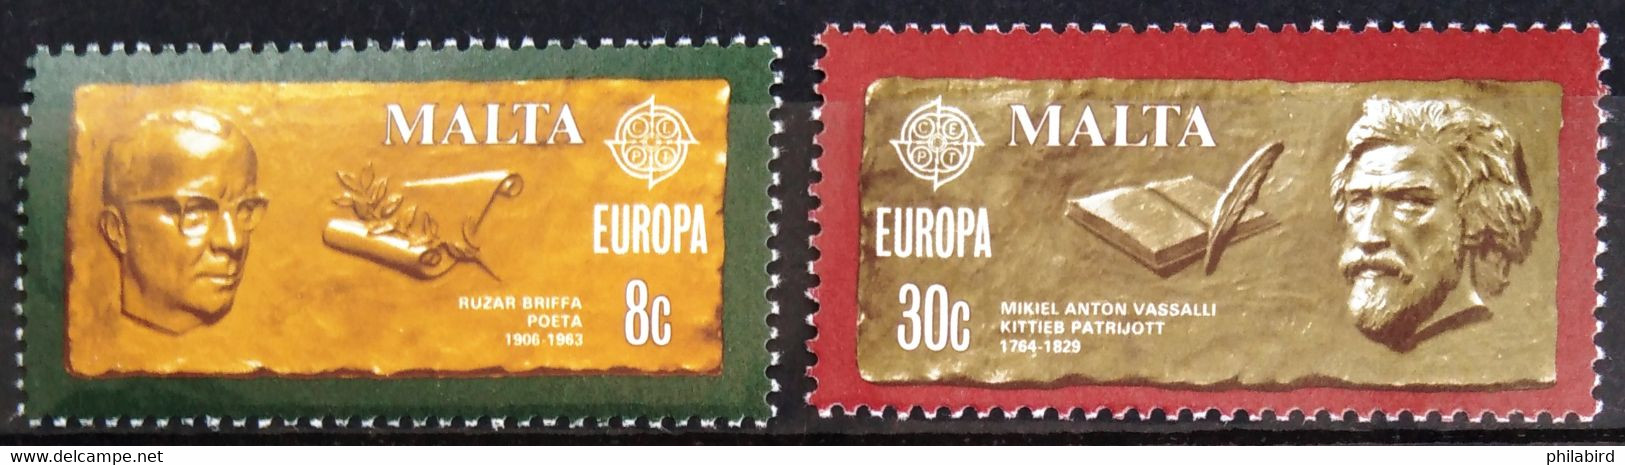 EUROPA 1980 - MALTE                  N° 603/604                        NEUF** - 1980